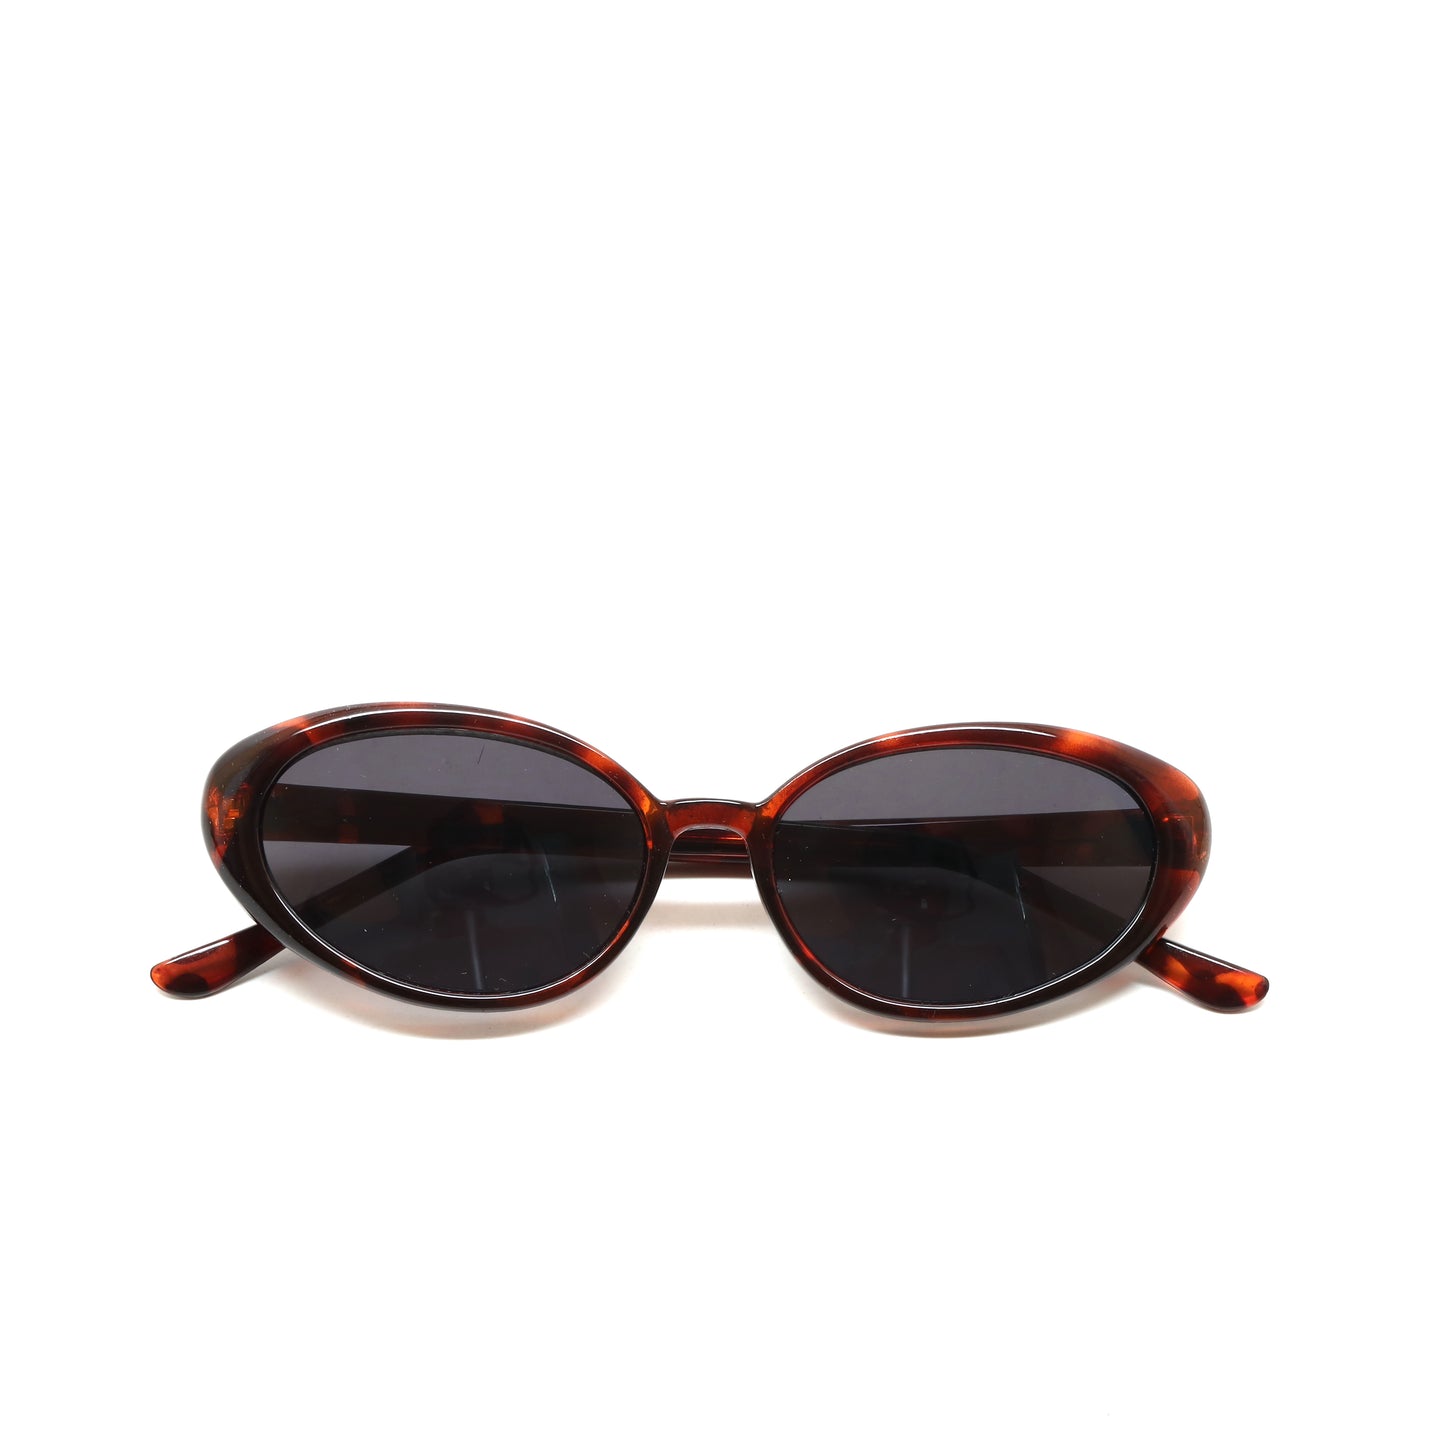 //Style 61// Vintage 90s Standard Oval Frame Sunglasses - Tortoise